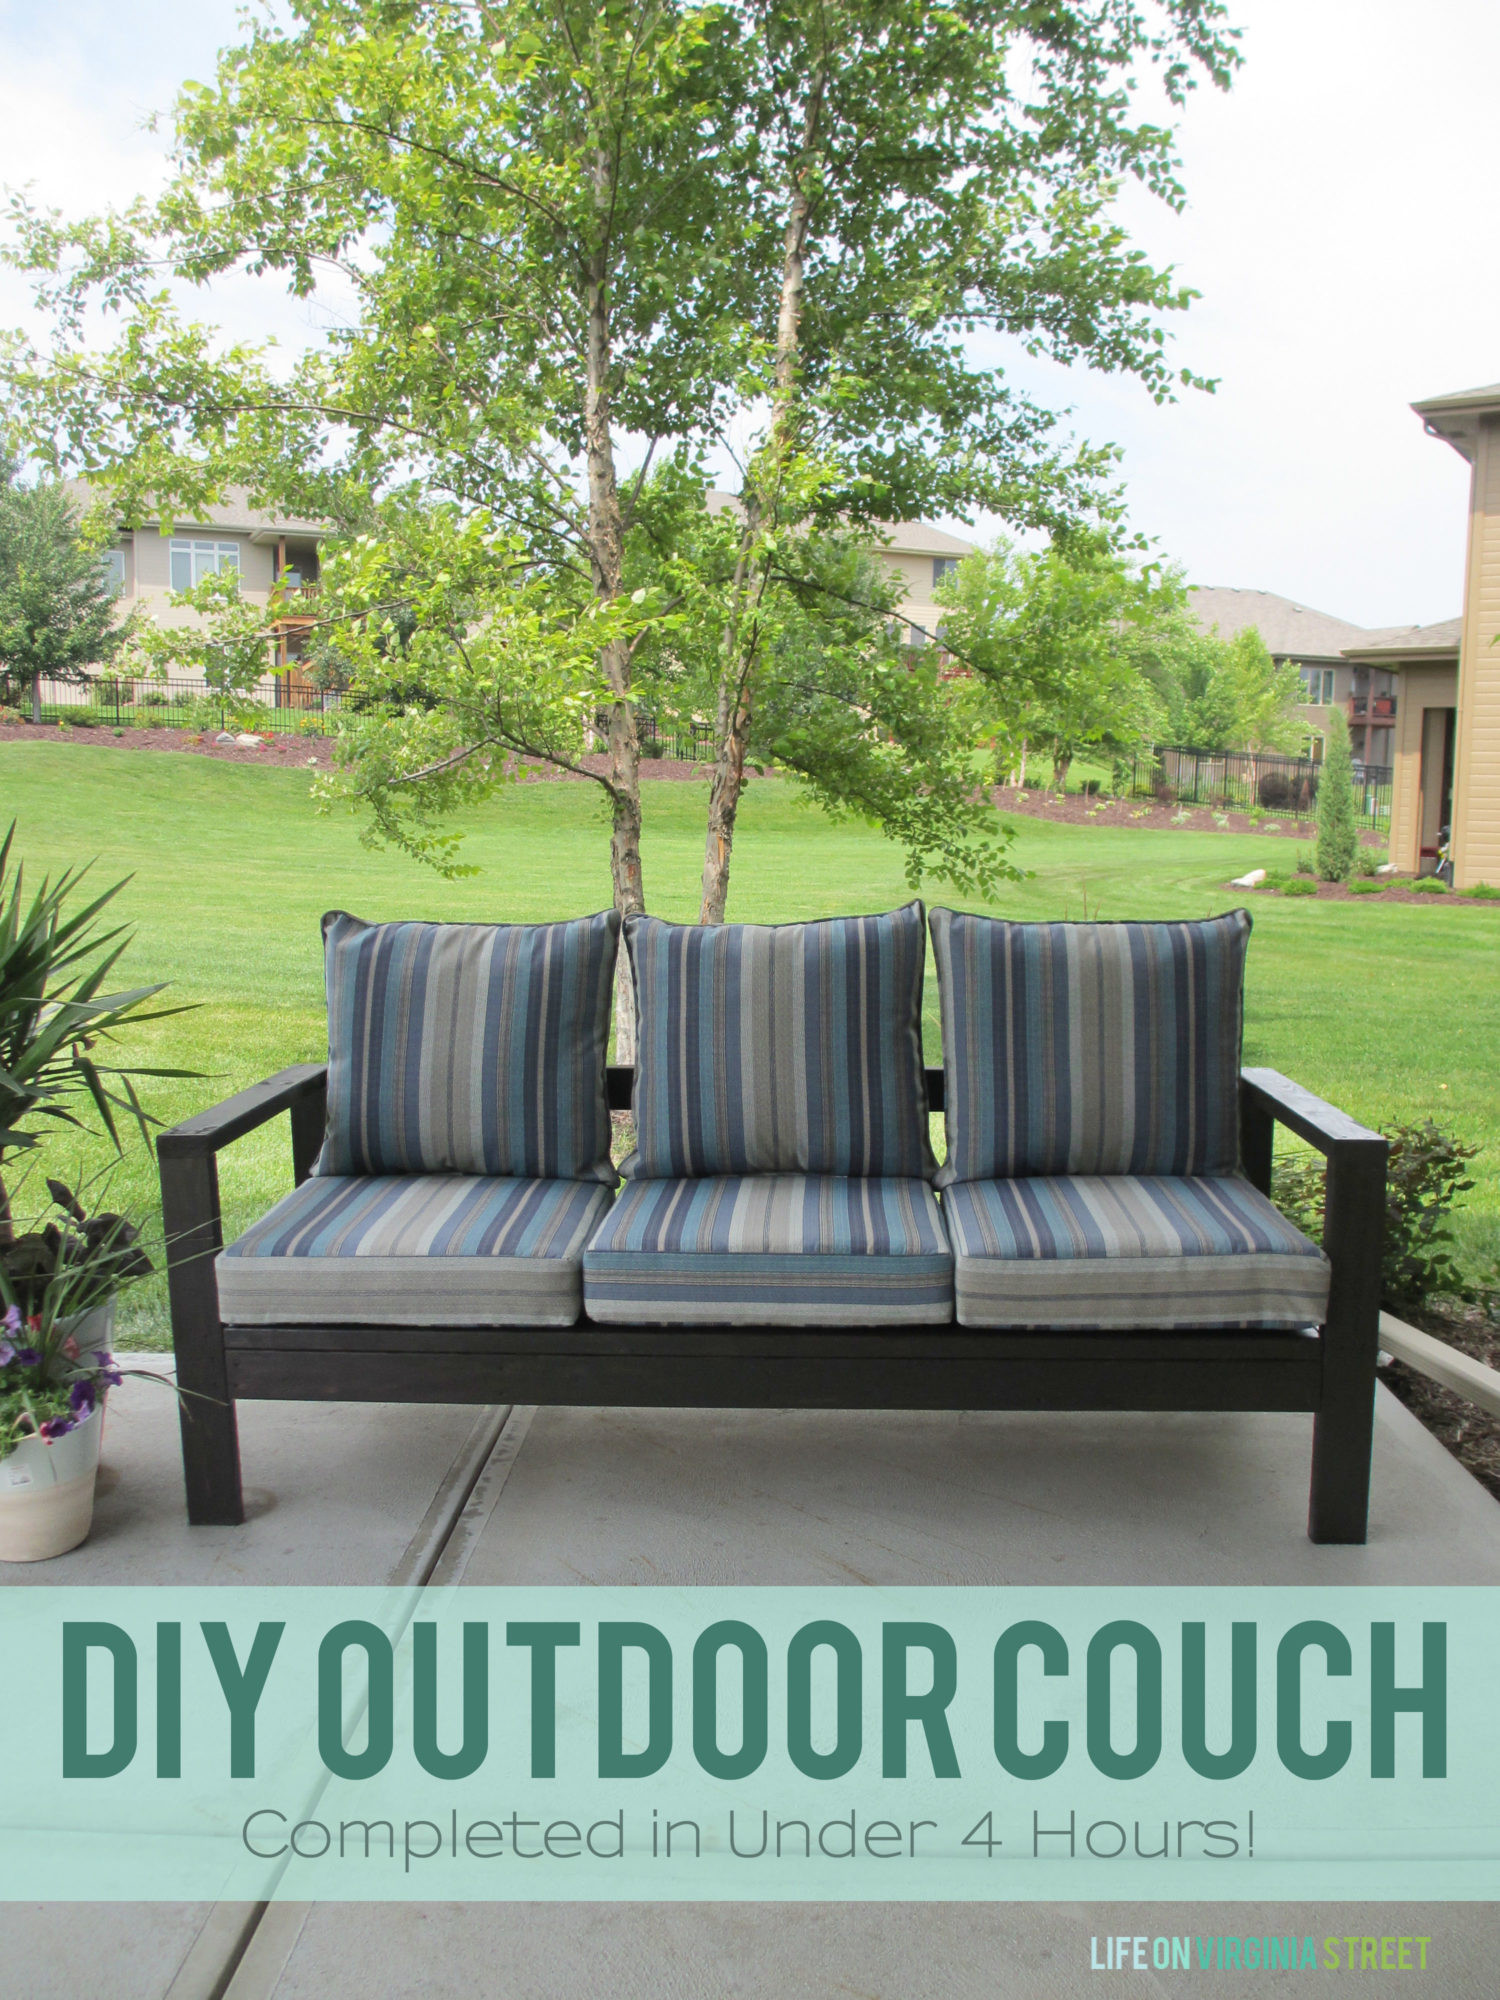 DIY Outdoor Sofa Cushions
 DIY Outdoor Couch Life Virginia Street